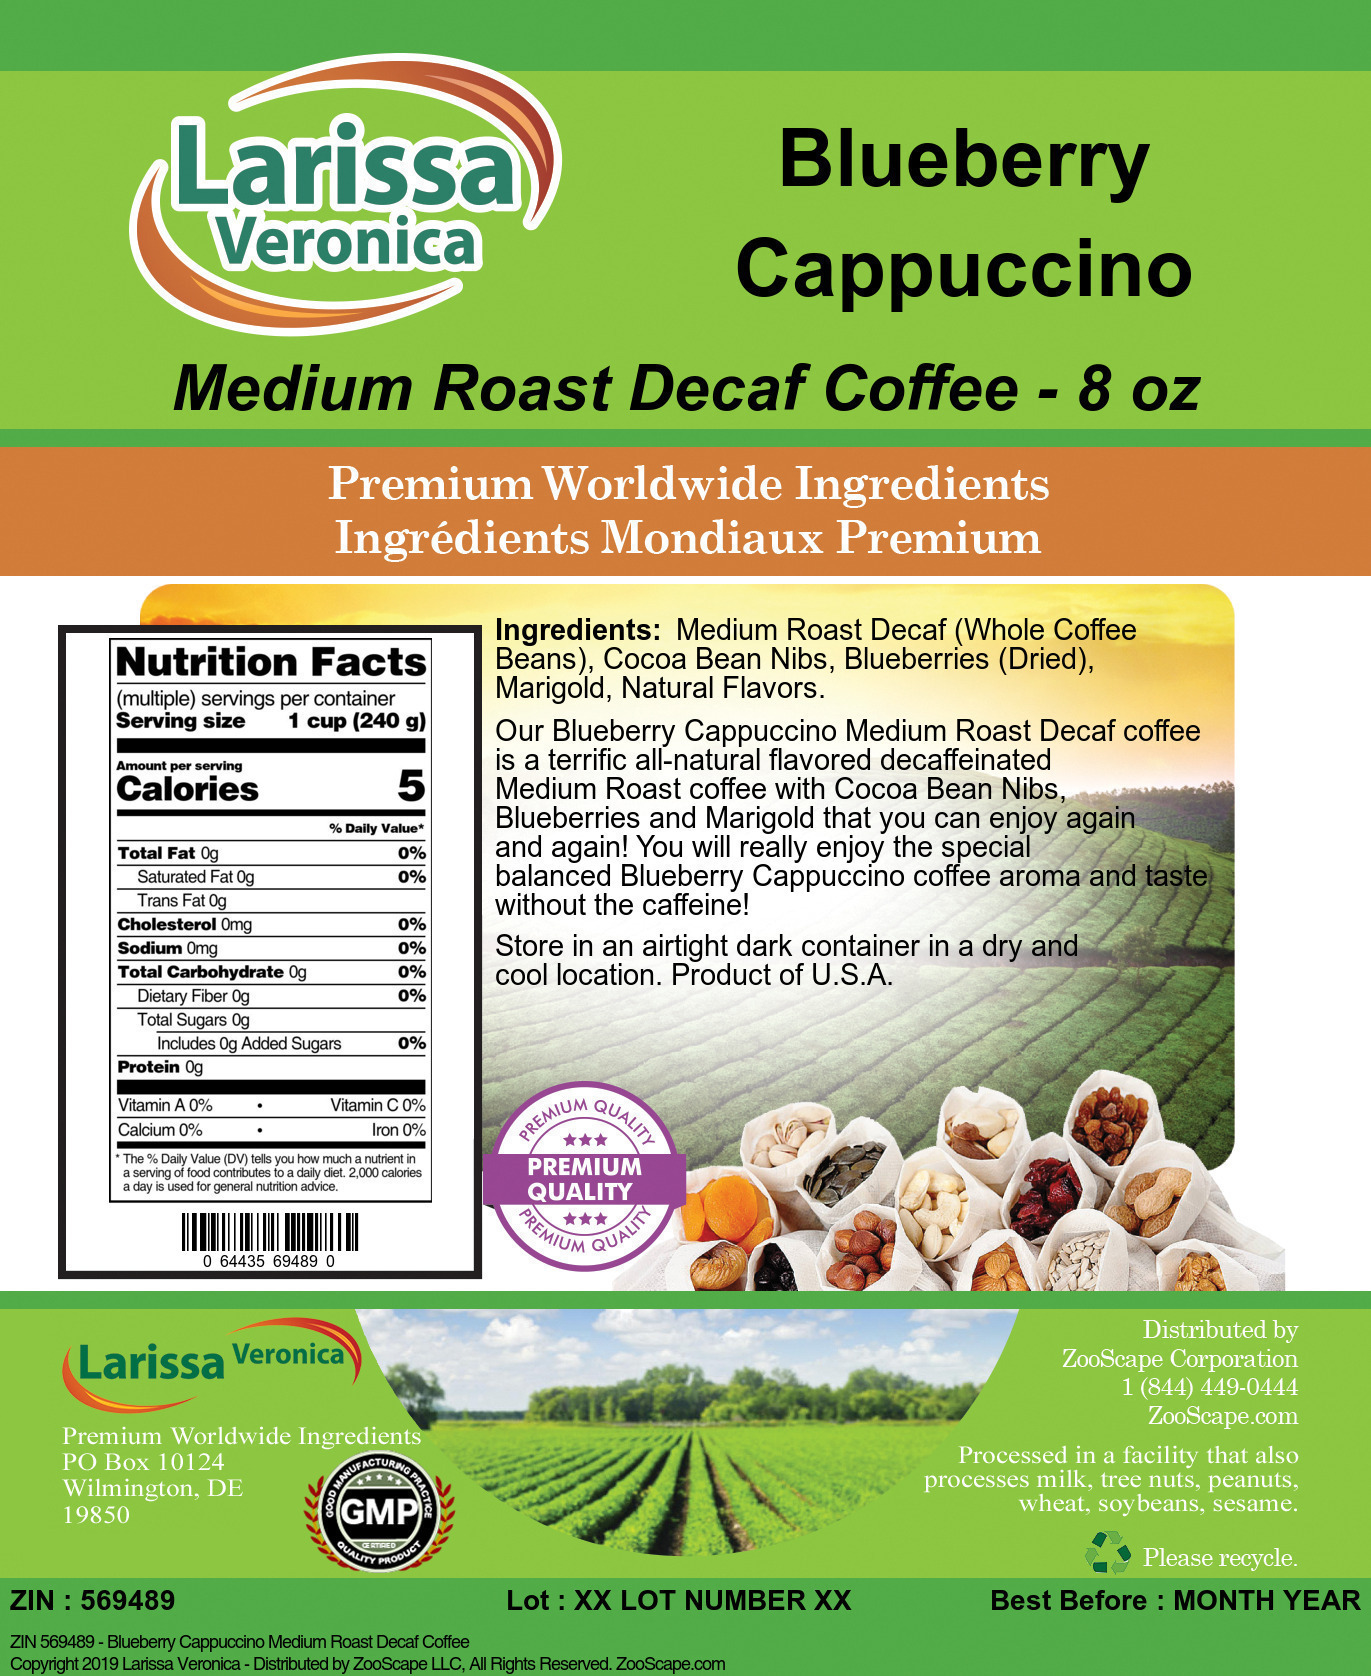 Blueberry Cappuccino Medium Roast Decaf Coffee - Label